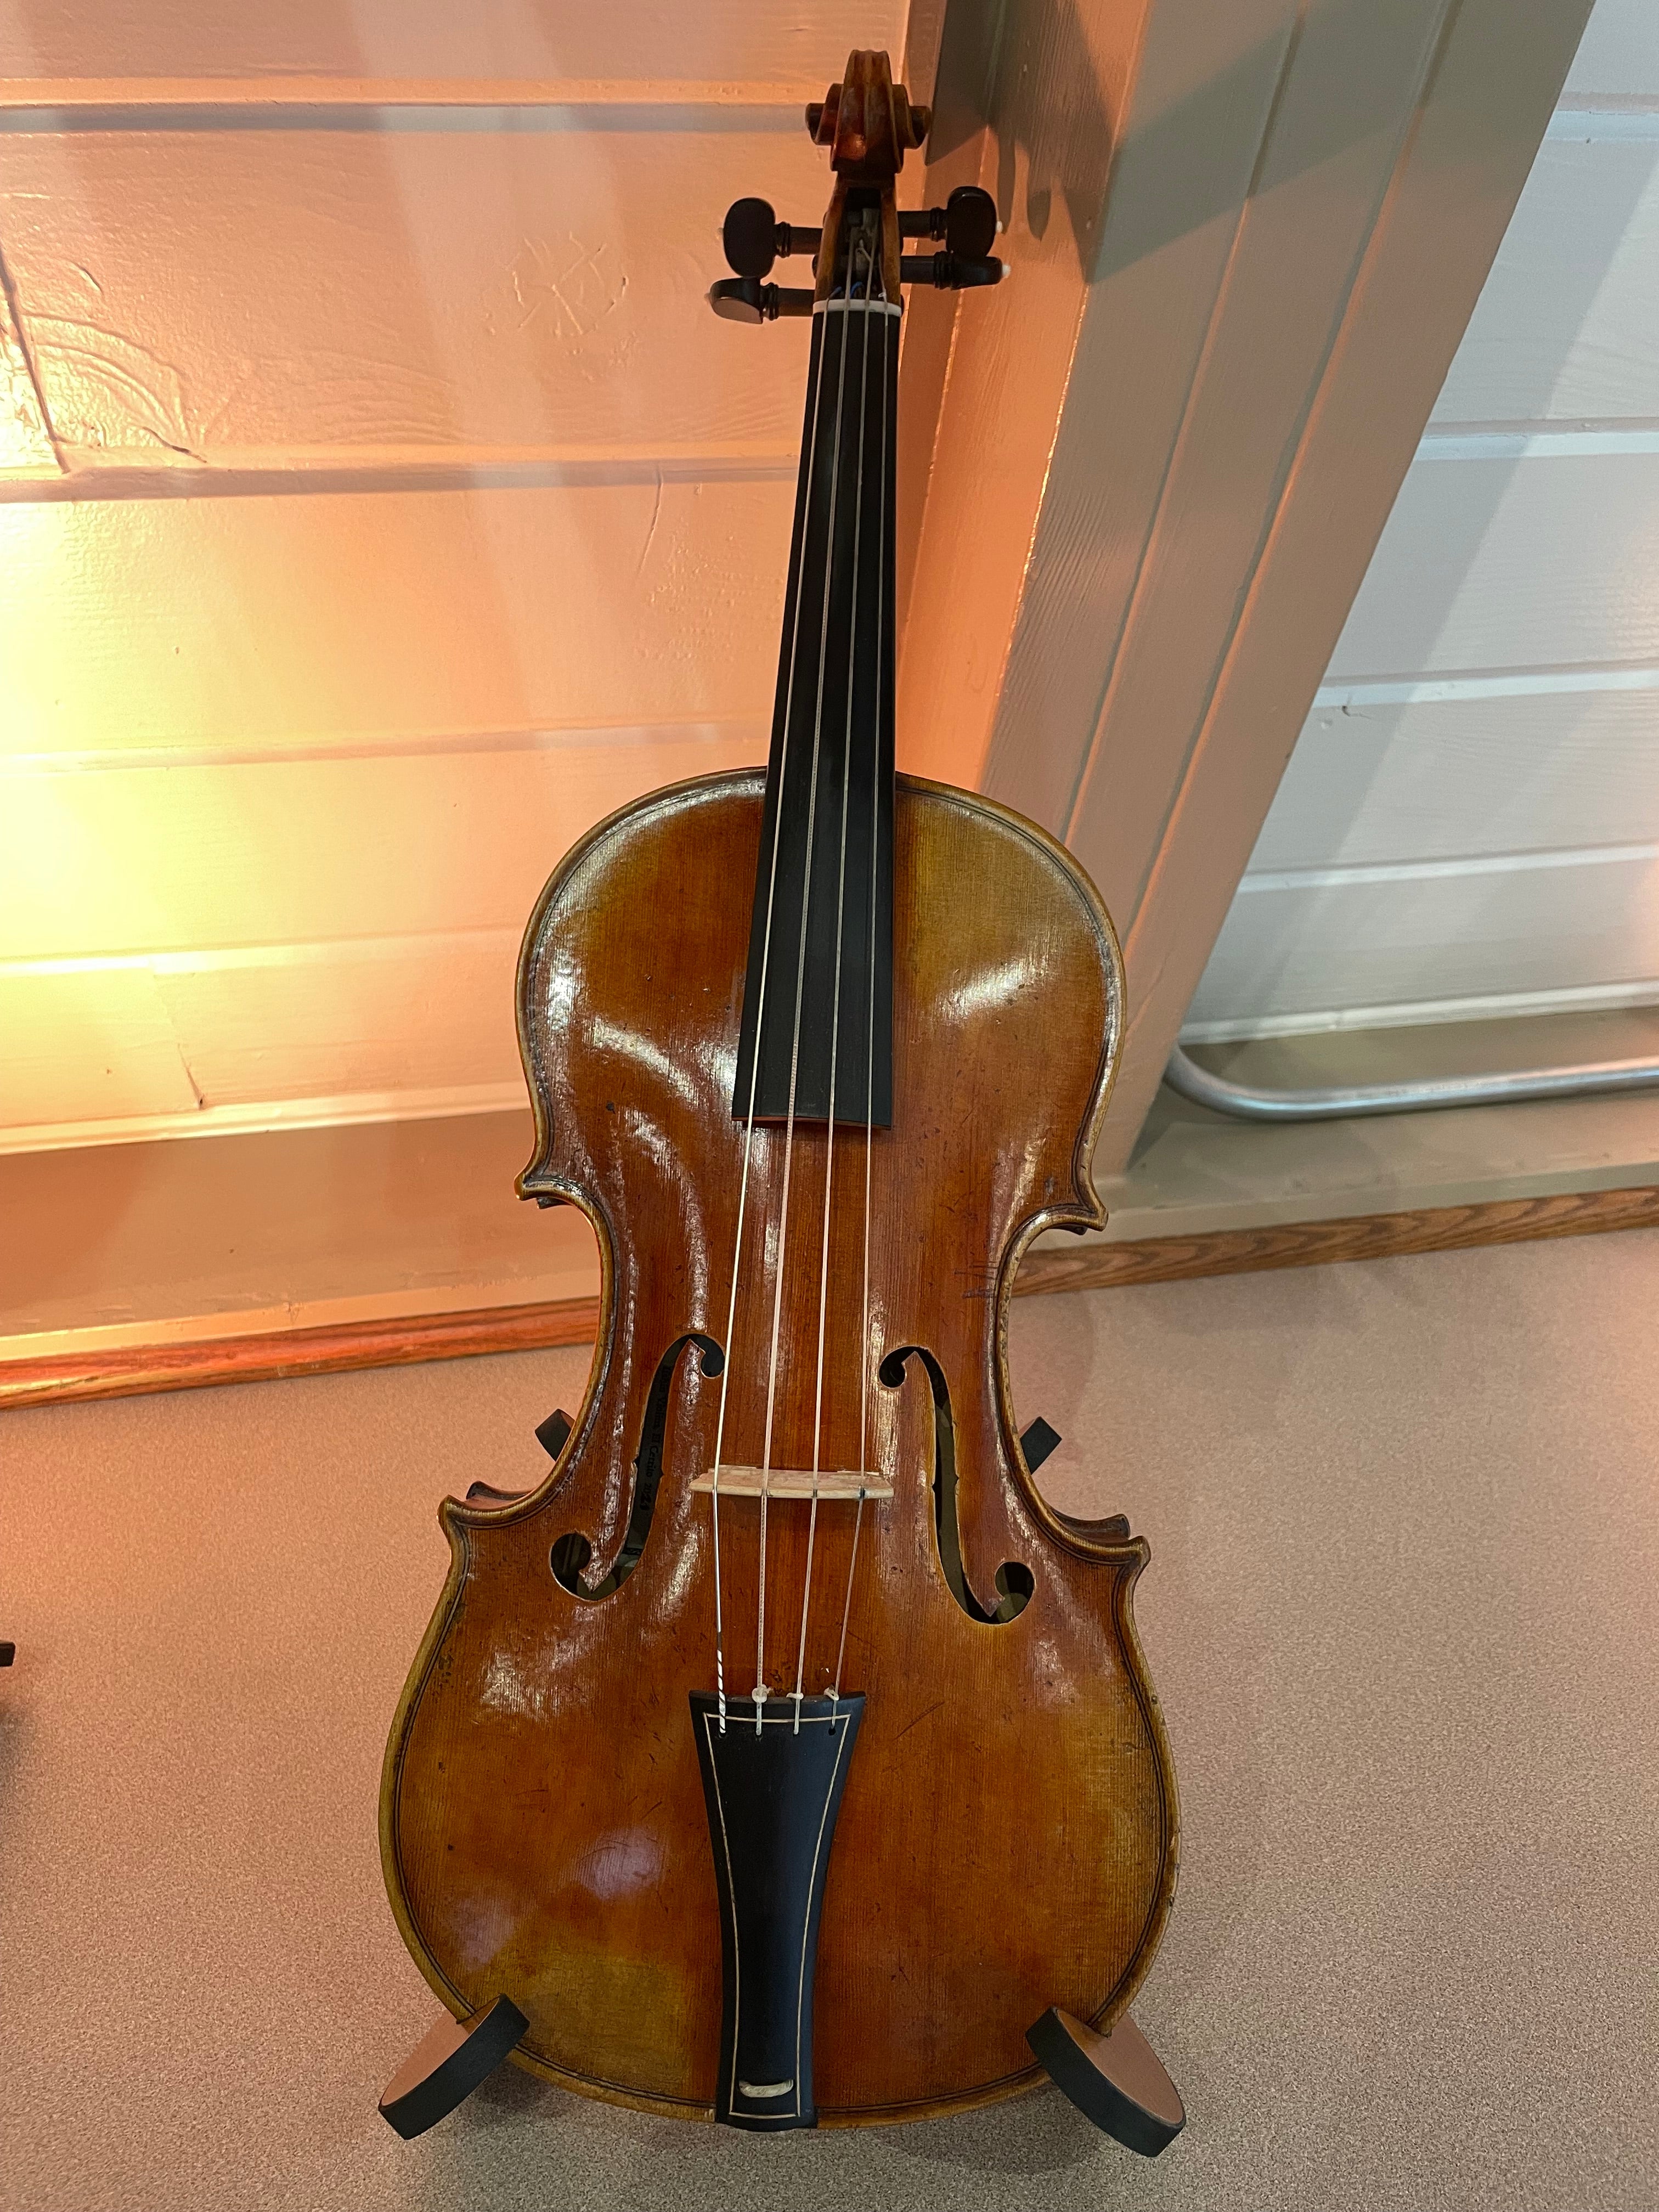 4/4 Baroque style violin - Jay Haide 2021